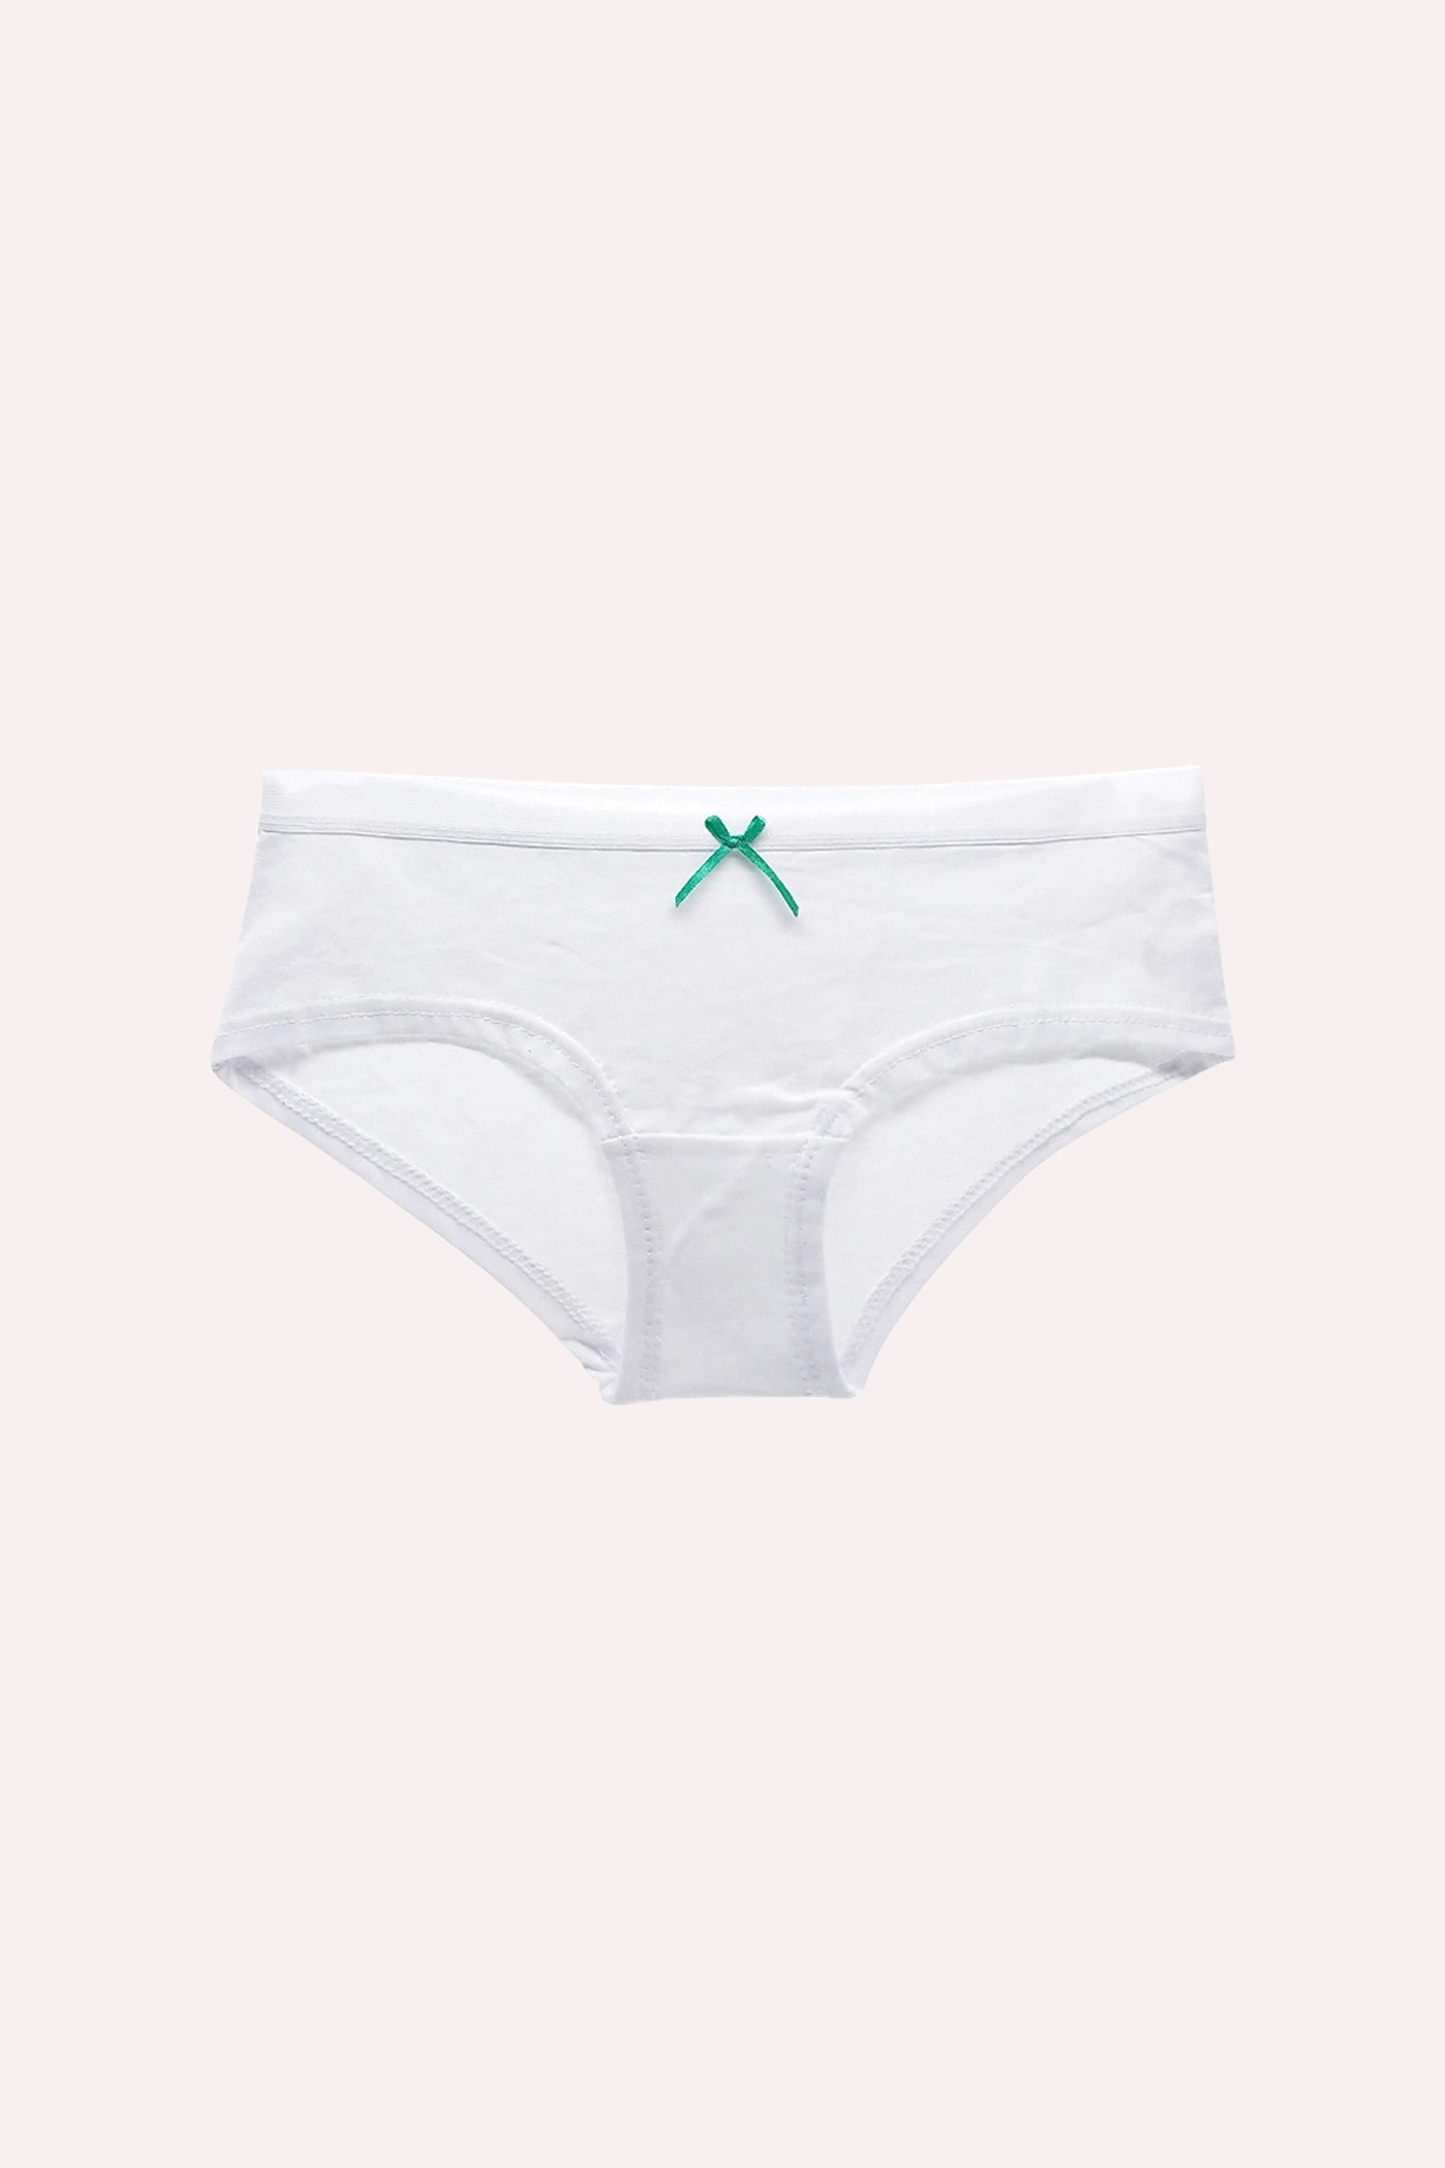 Aura - stretchable Soft cotton girls panty